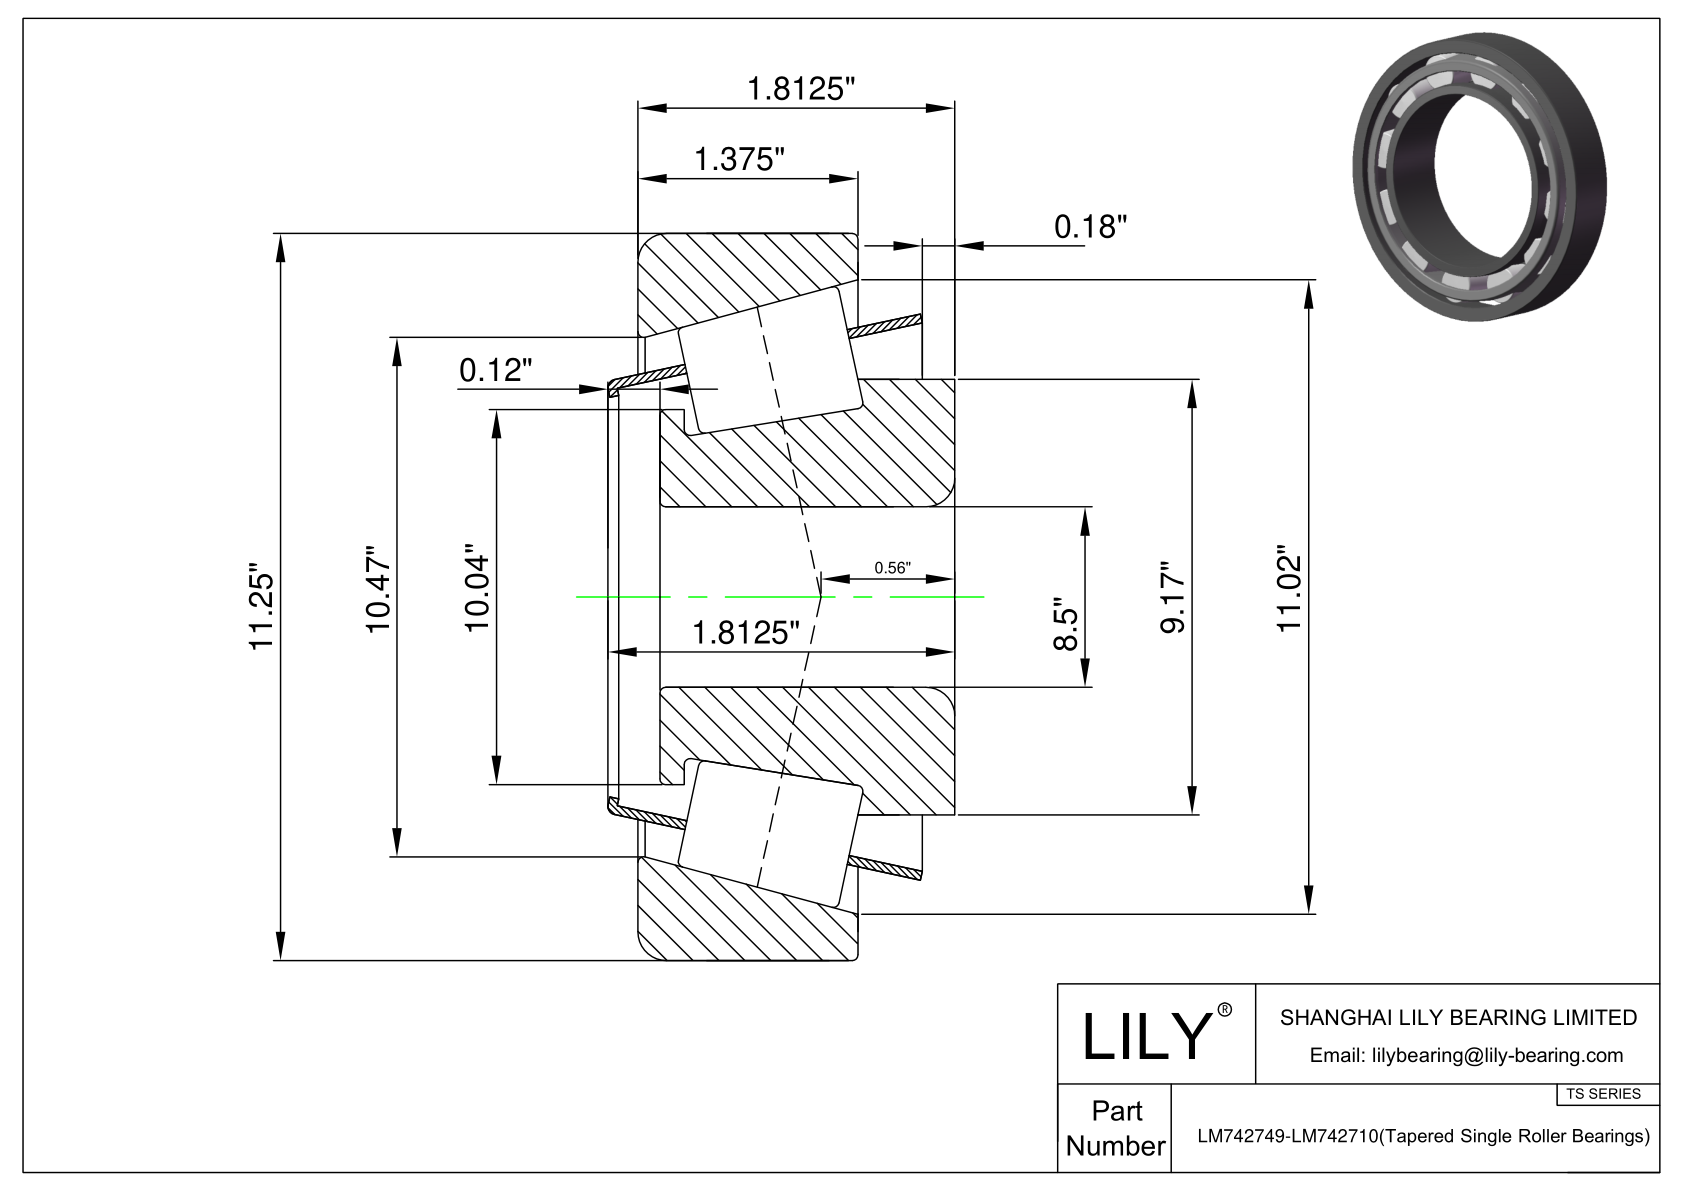 LM742749-LM742710 TS系列(圆锥单滚子轴承)(英制) CAD图形